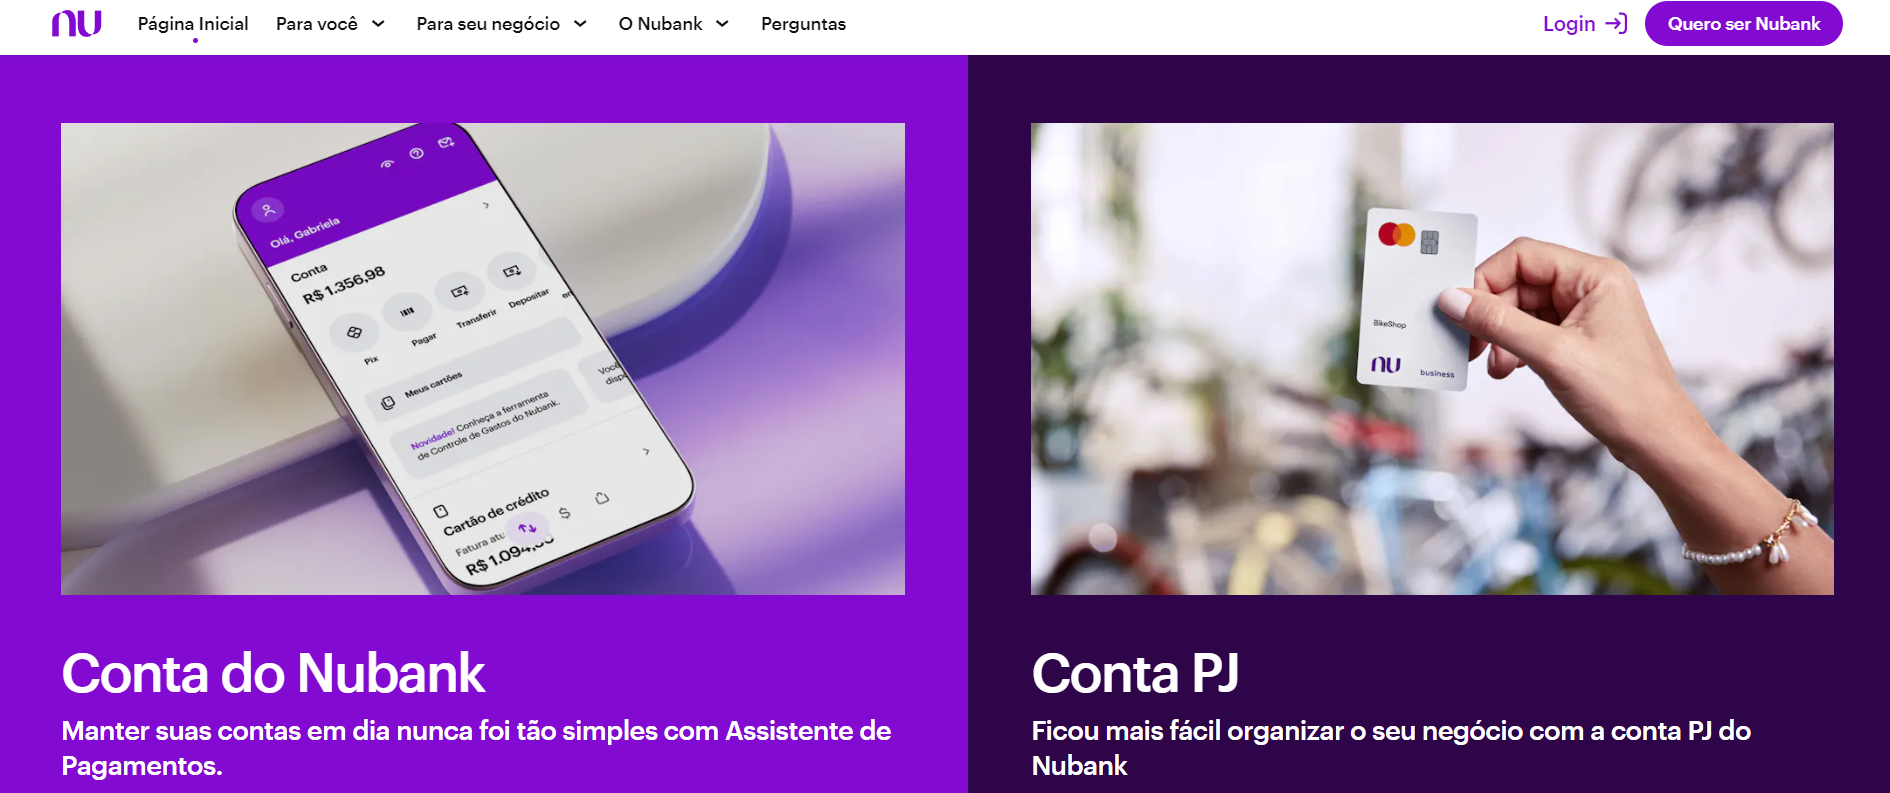 Sites de apostas Nubank no Brasil